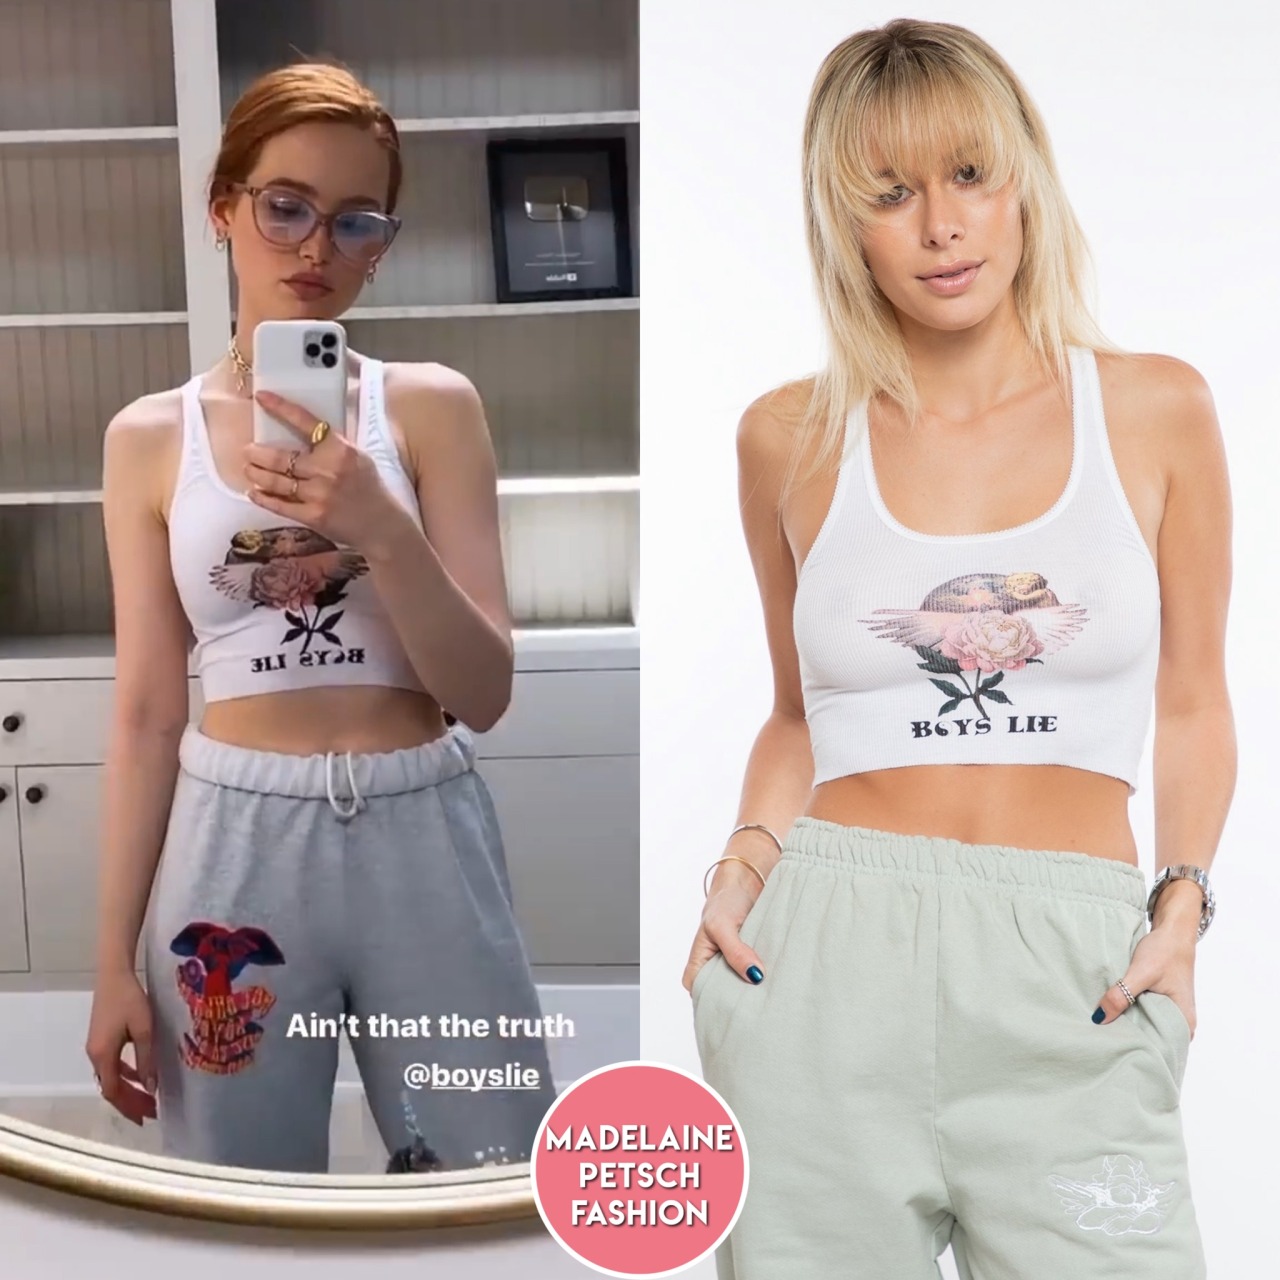 Madelaine Petsch Fashion — Instagram Stories. Madelaine wore her Louis